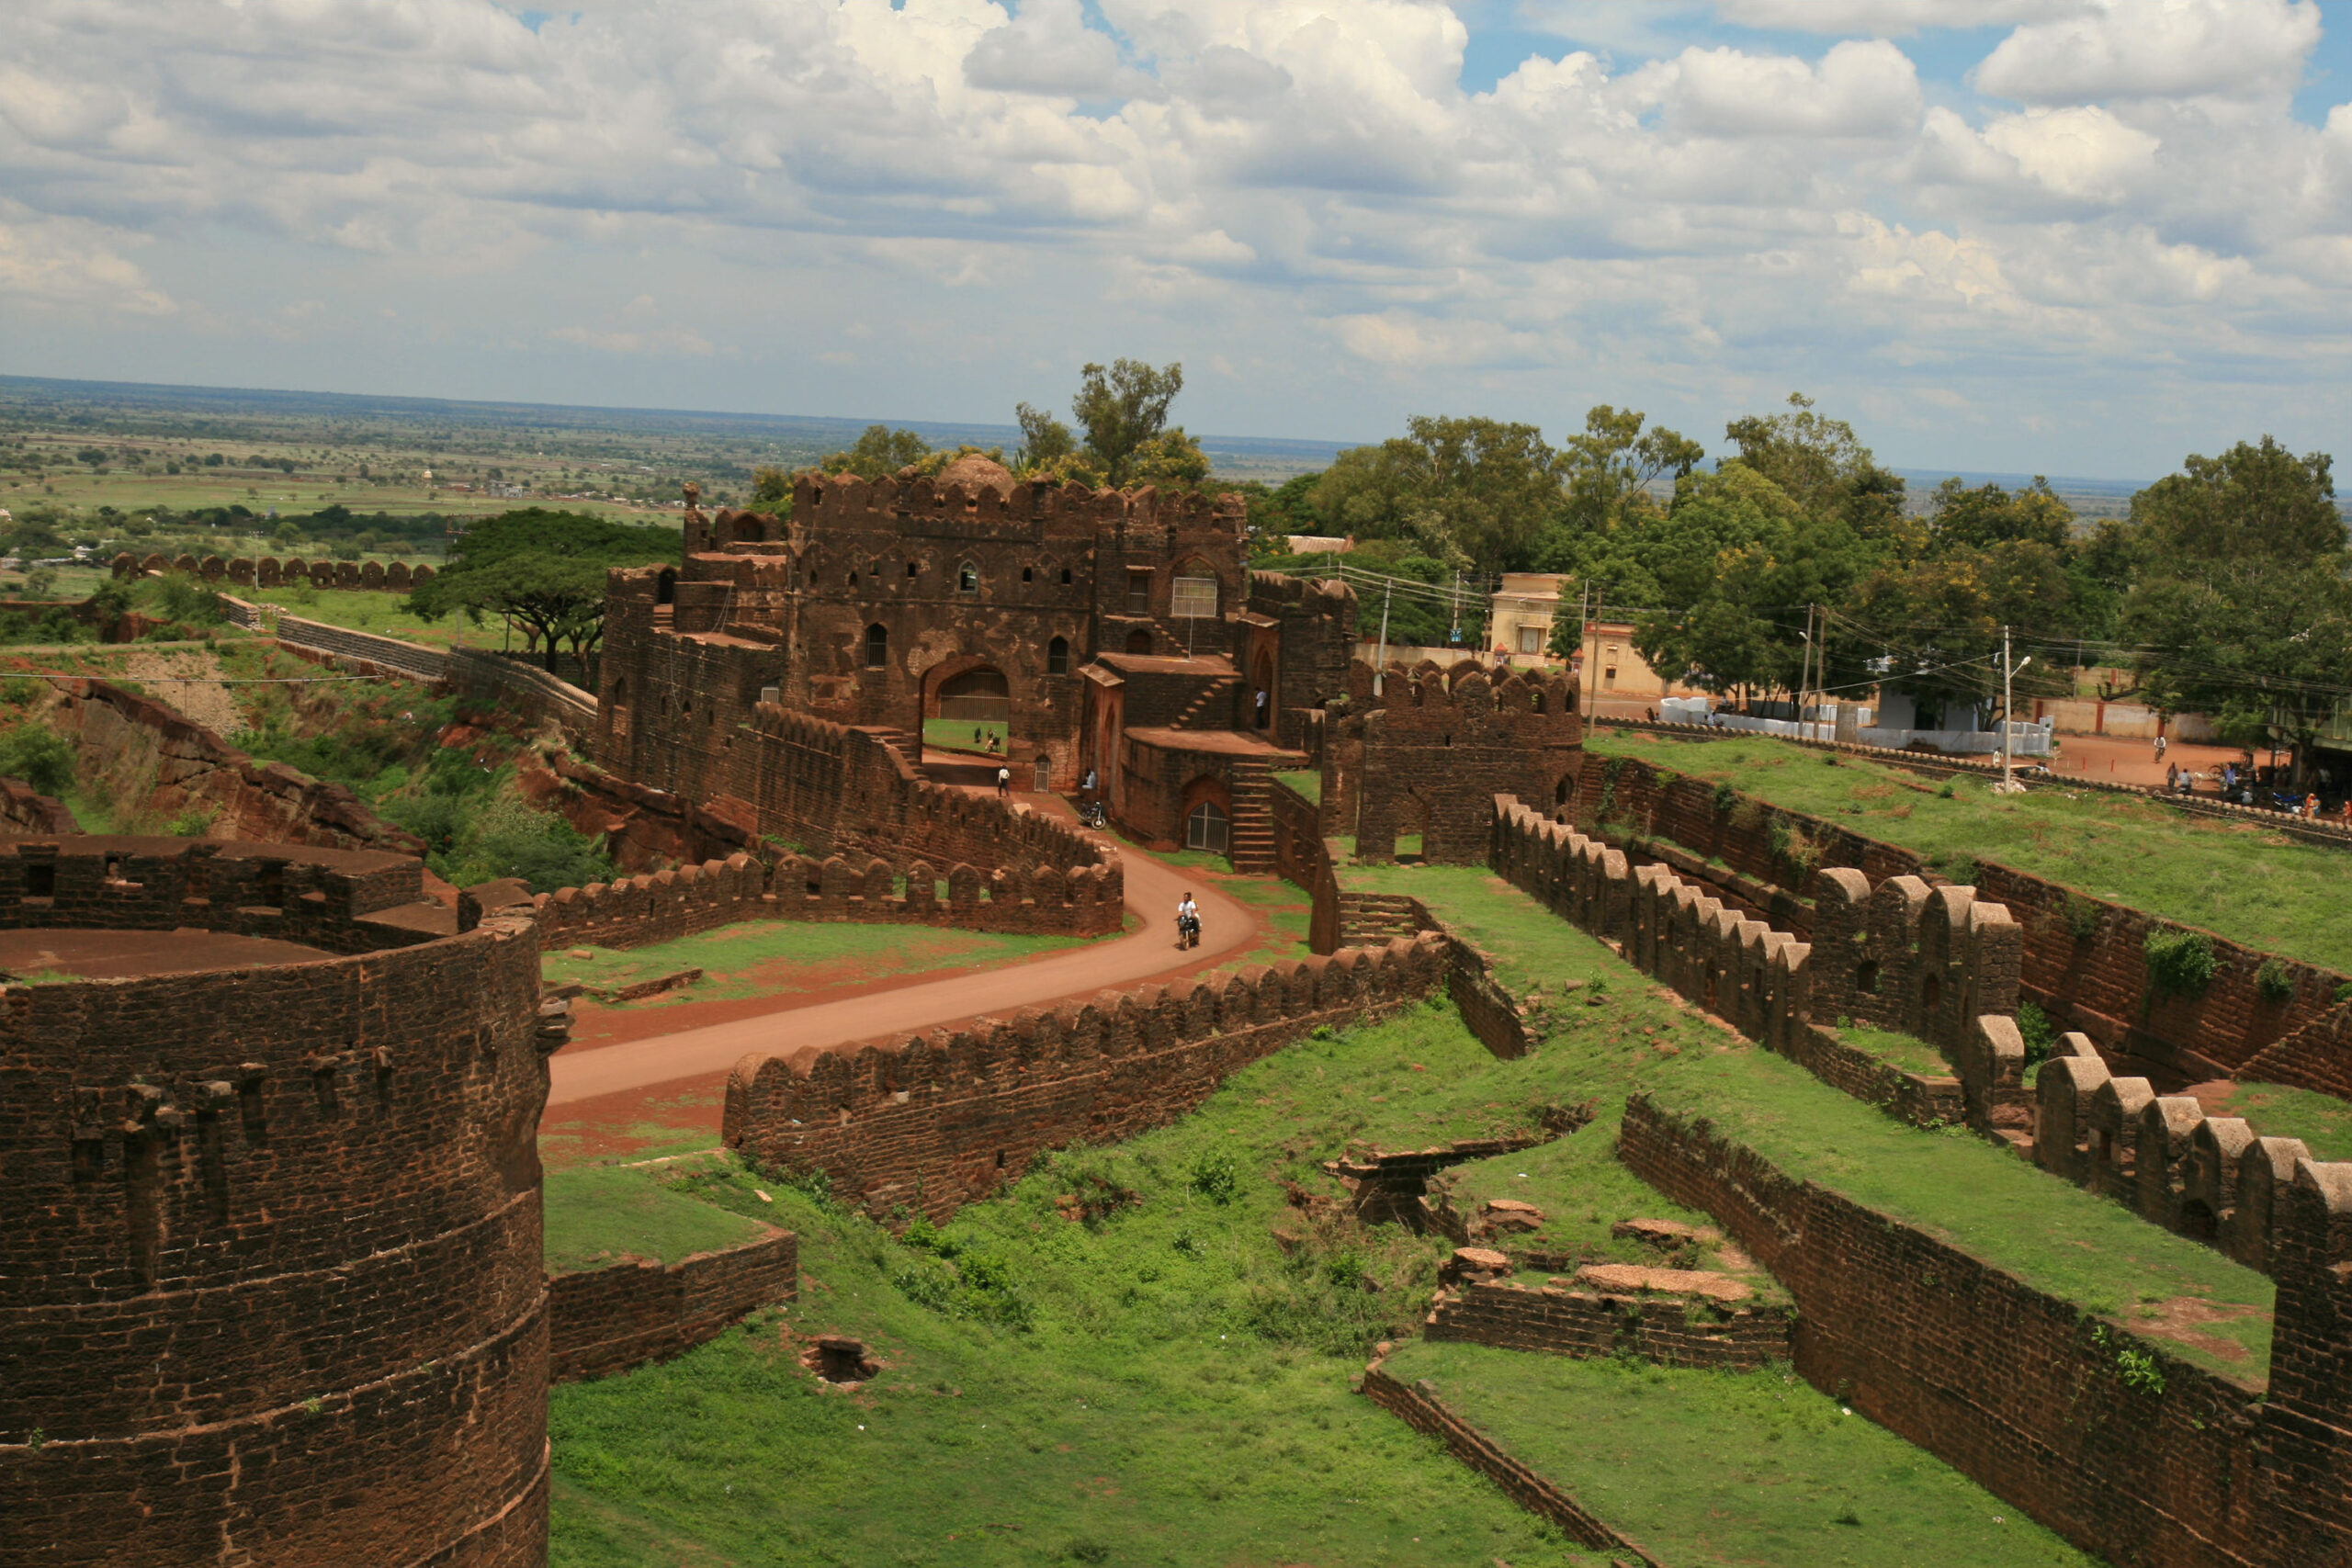 Bidar Fort is one of the forts of Karnataka